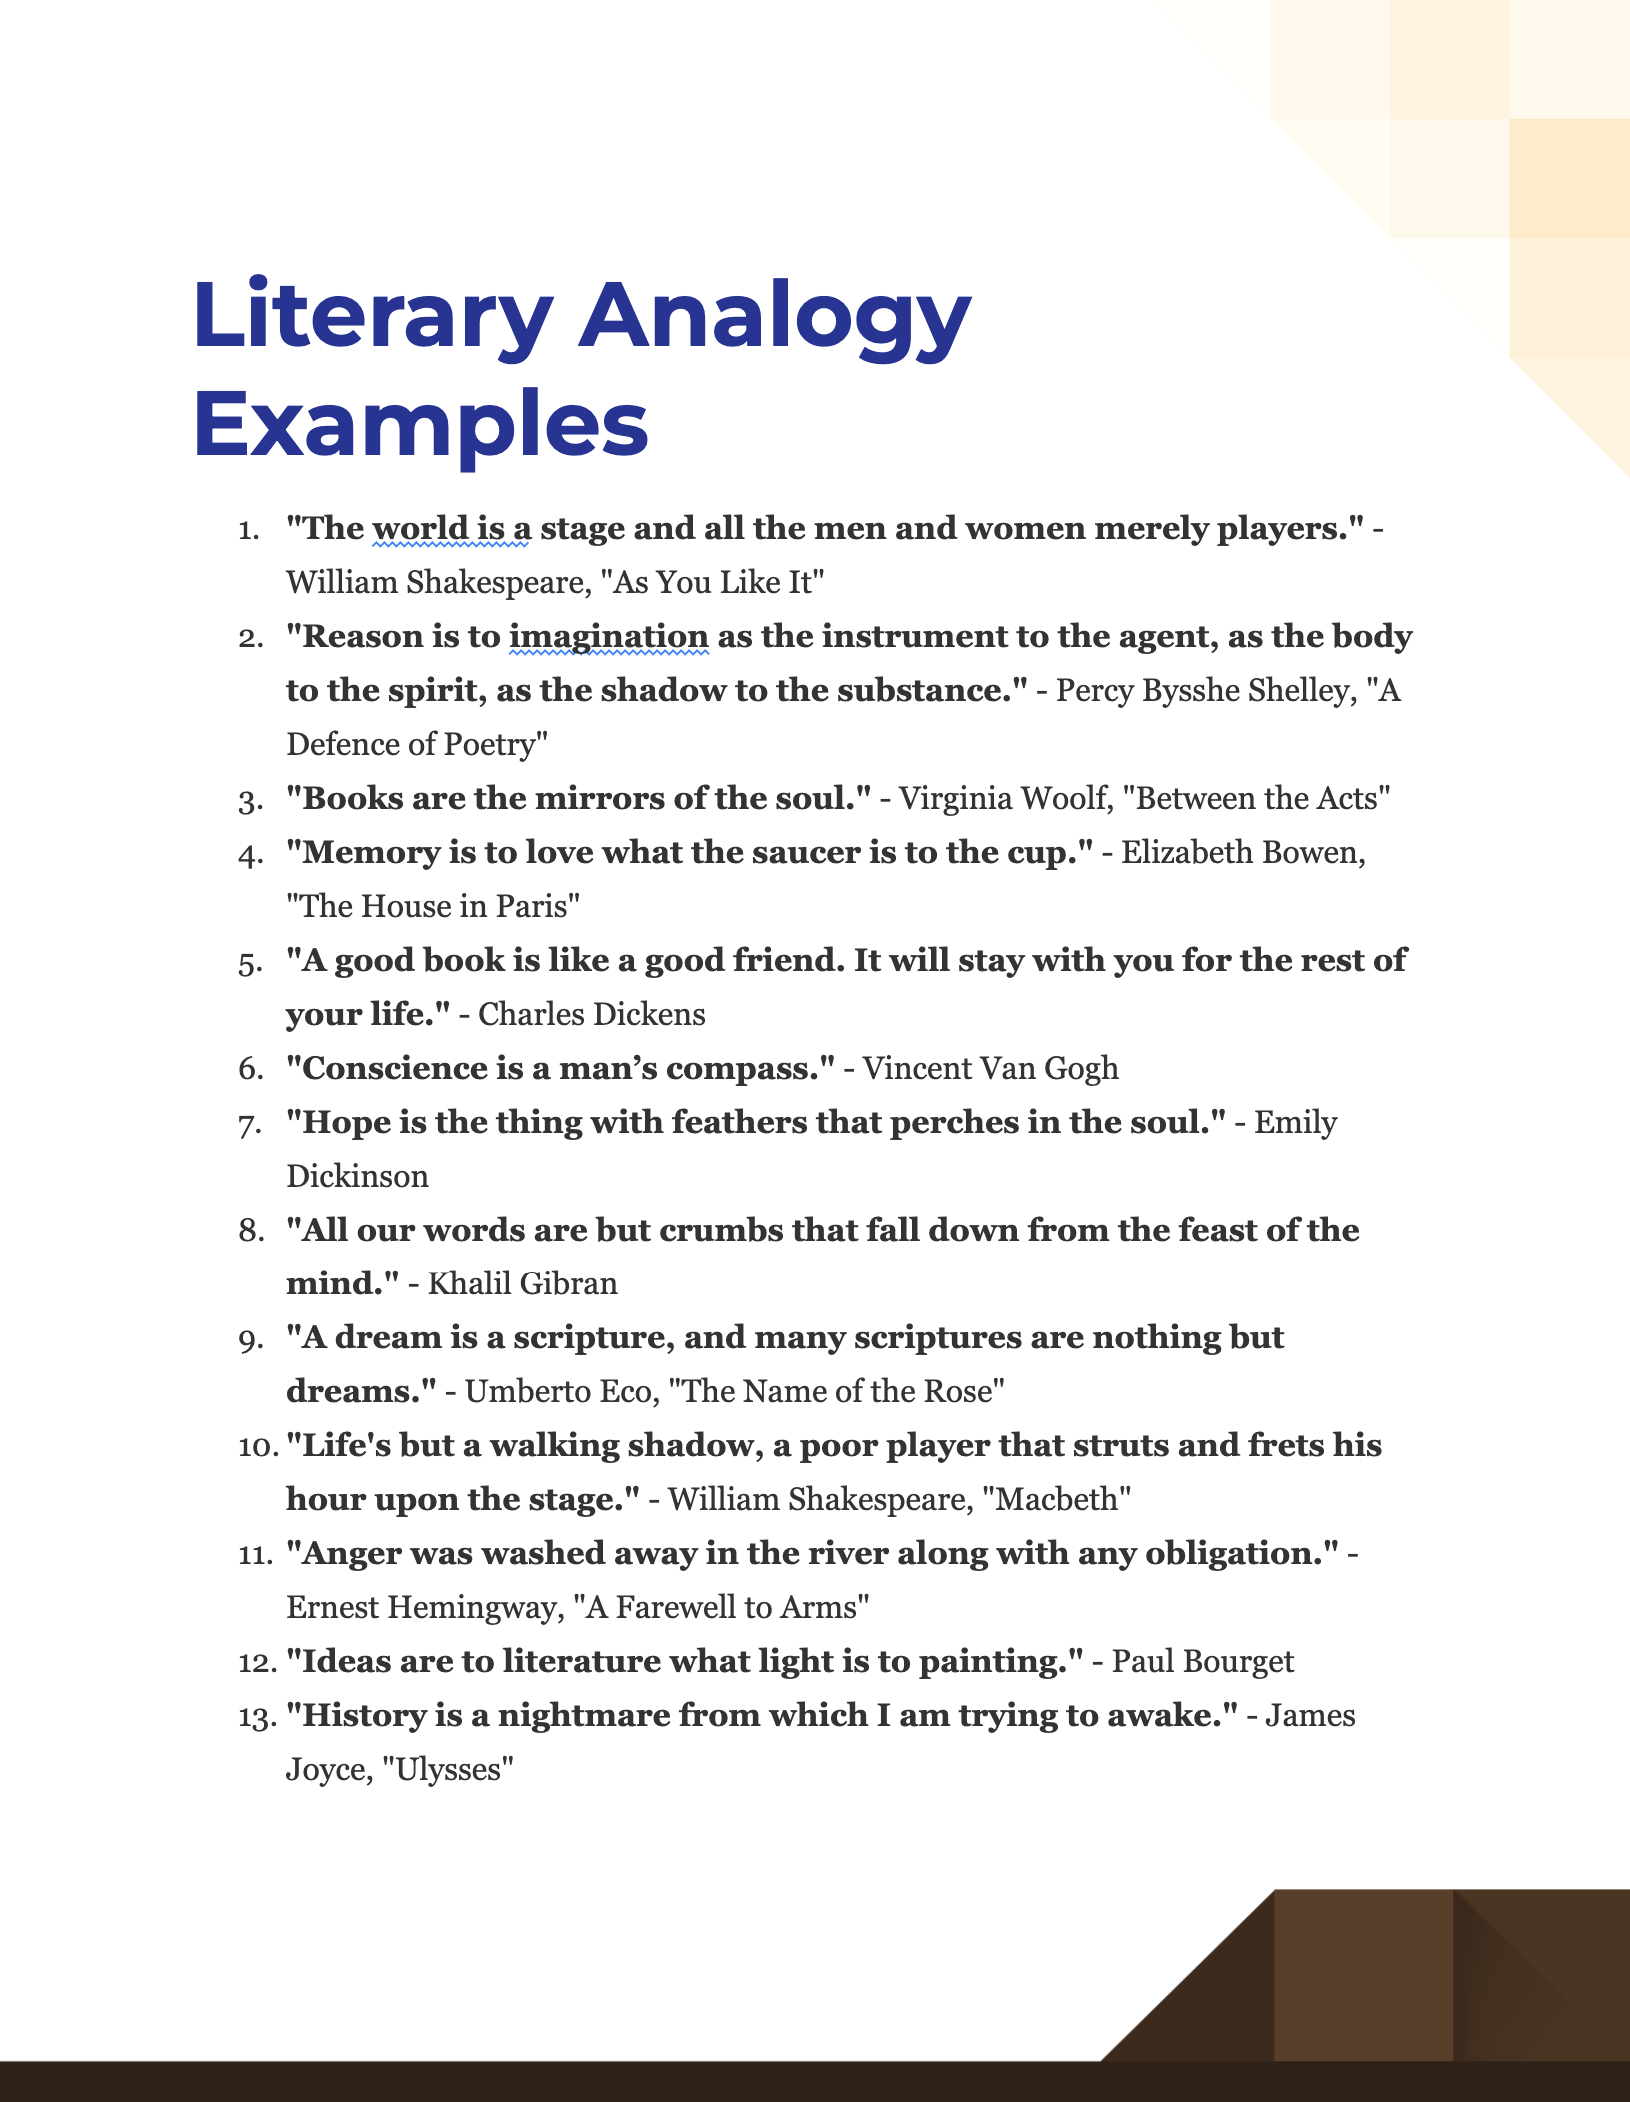 Literary Analogy Examples